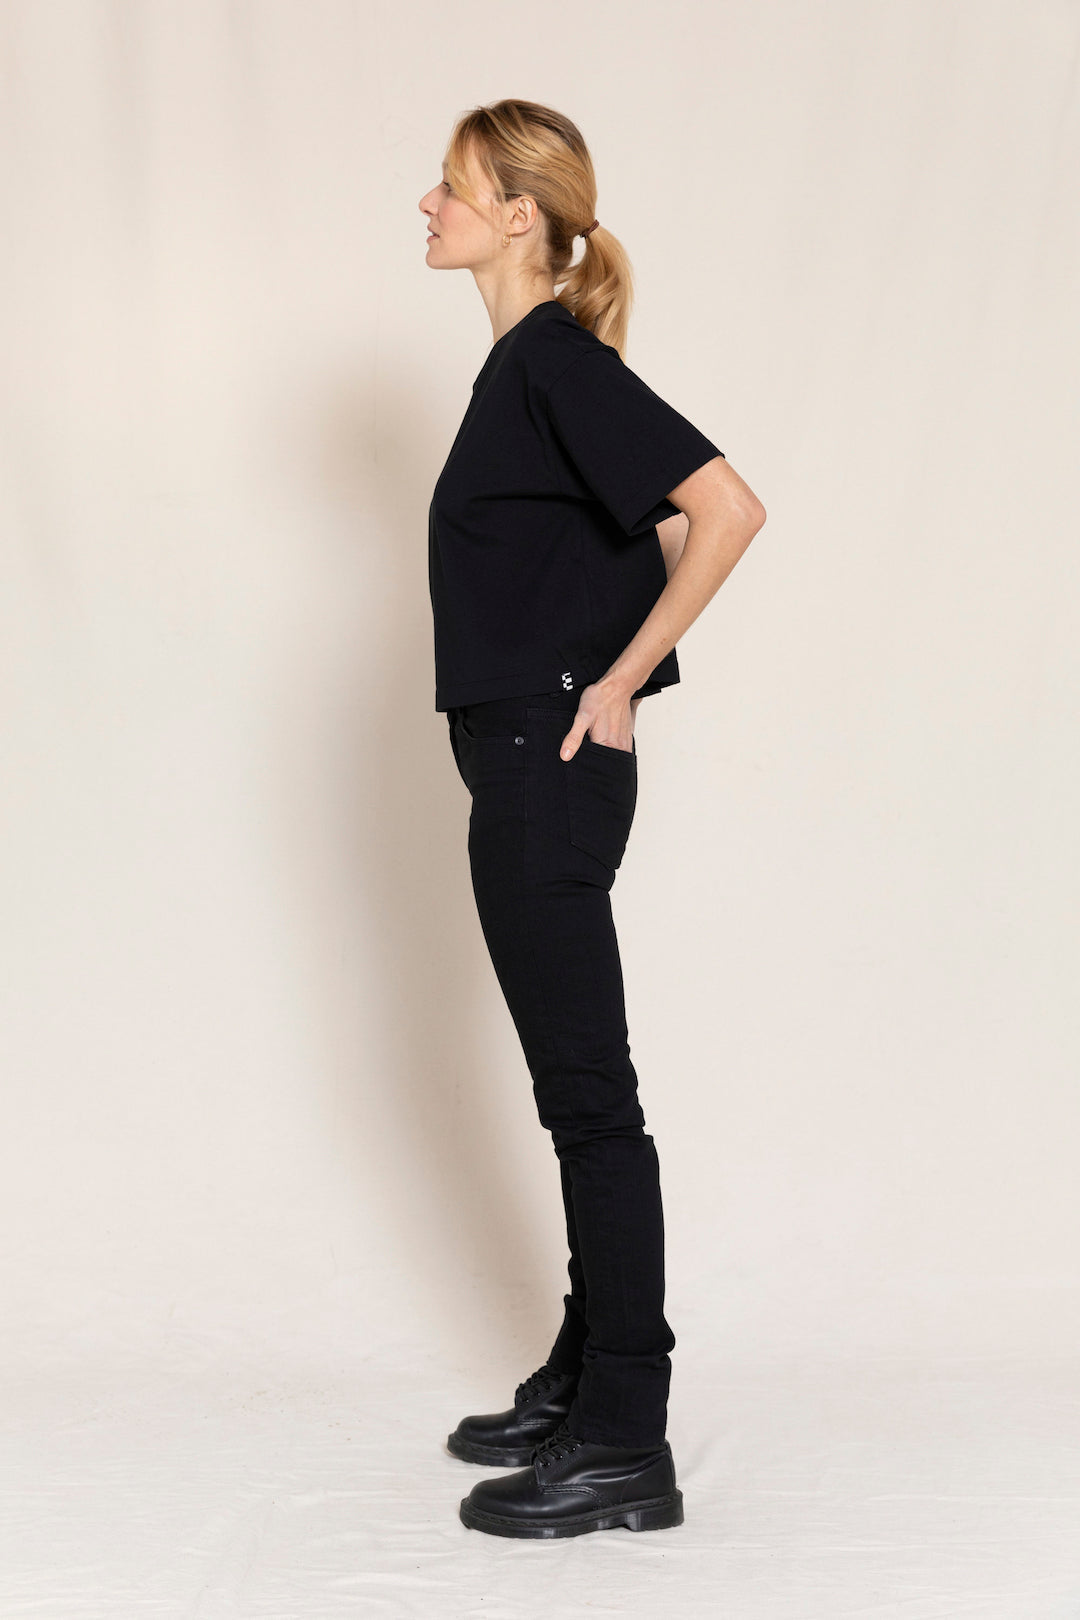 ICON Black Denim - 5-Pocket Slim Fit Jeans | Women